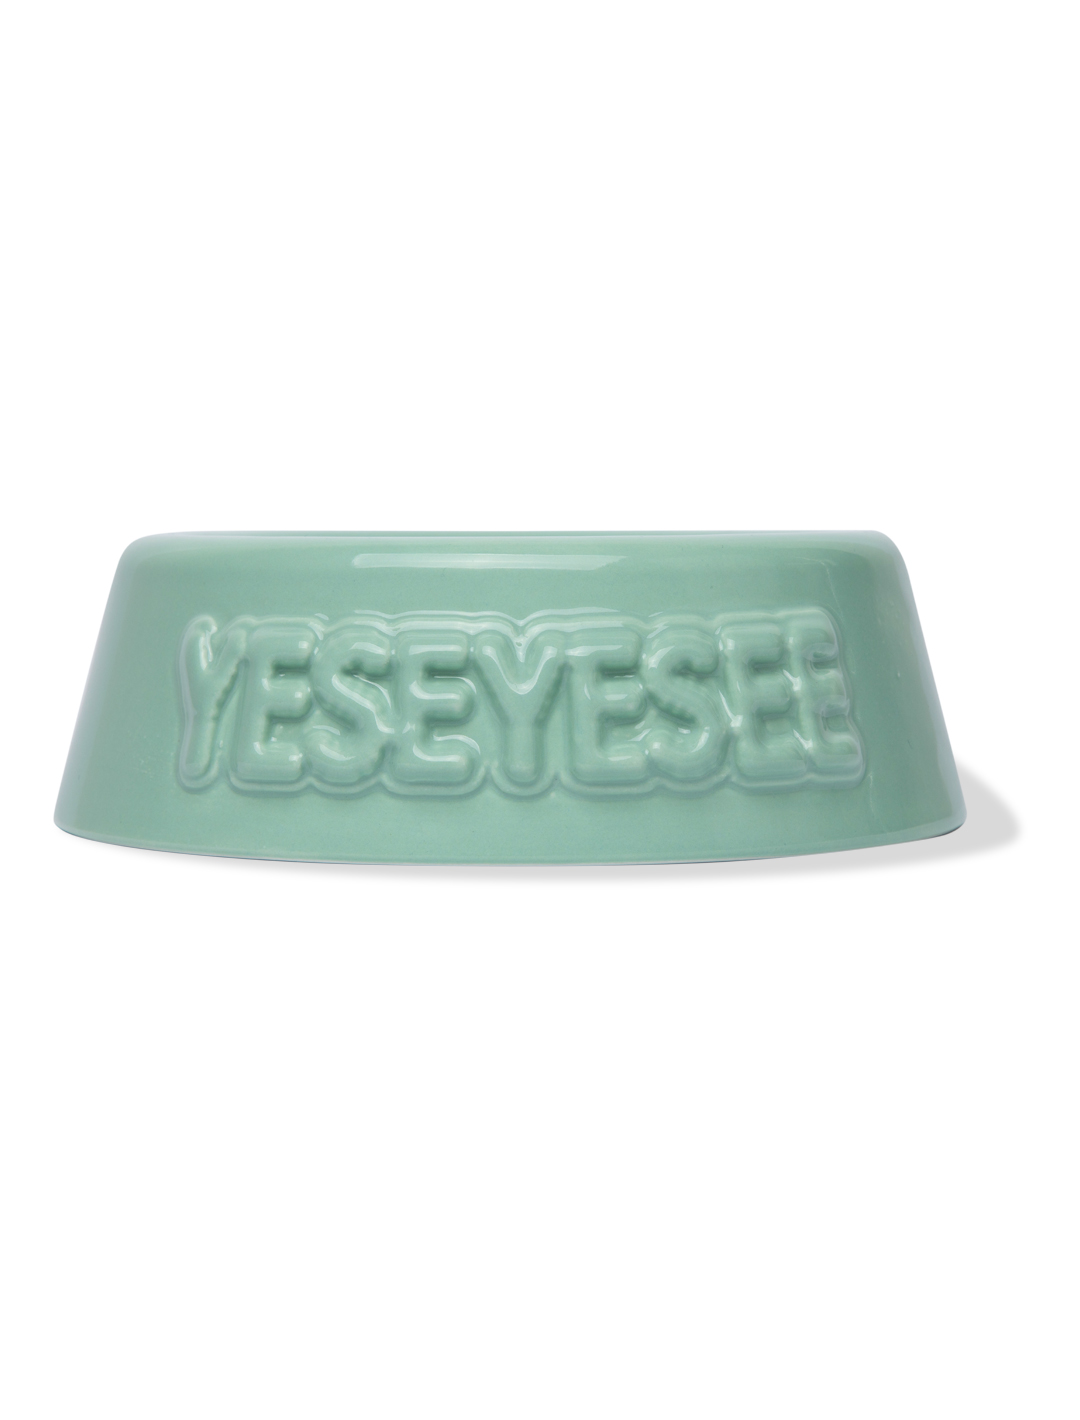 Y.E.S Ceramic Pet Bowl Jade Green